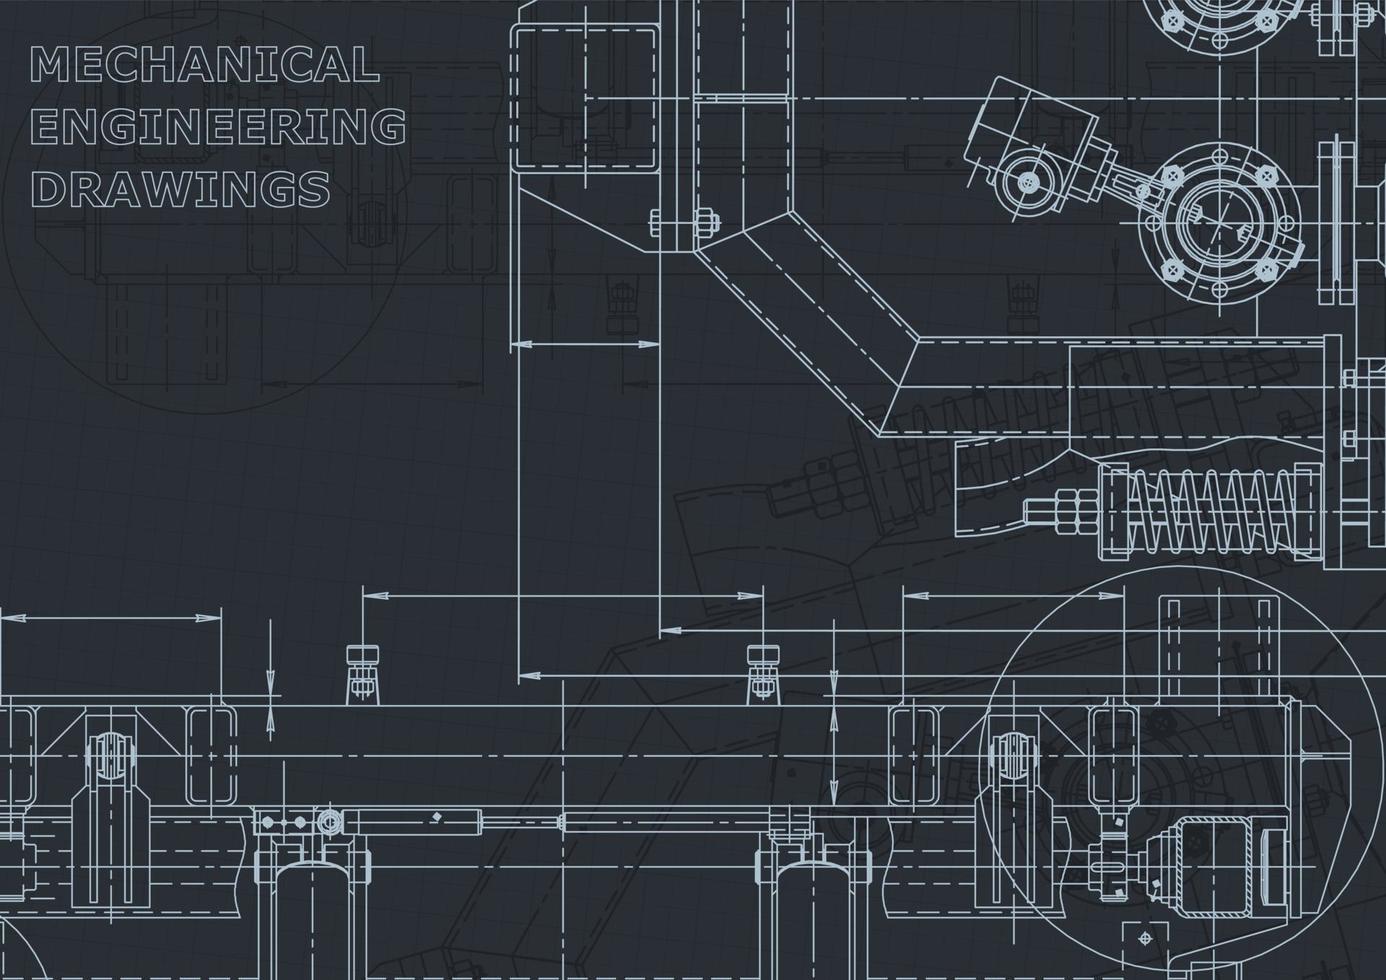 planimetria. disegni di ingegneria vettoriale. fabbricazione di strumenti meccanici vettore